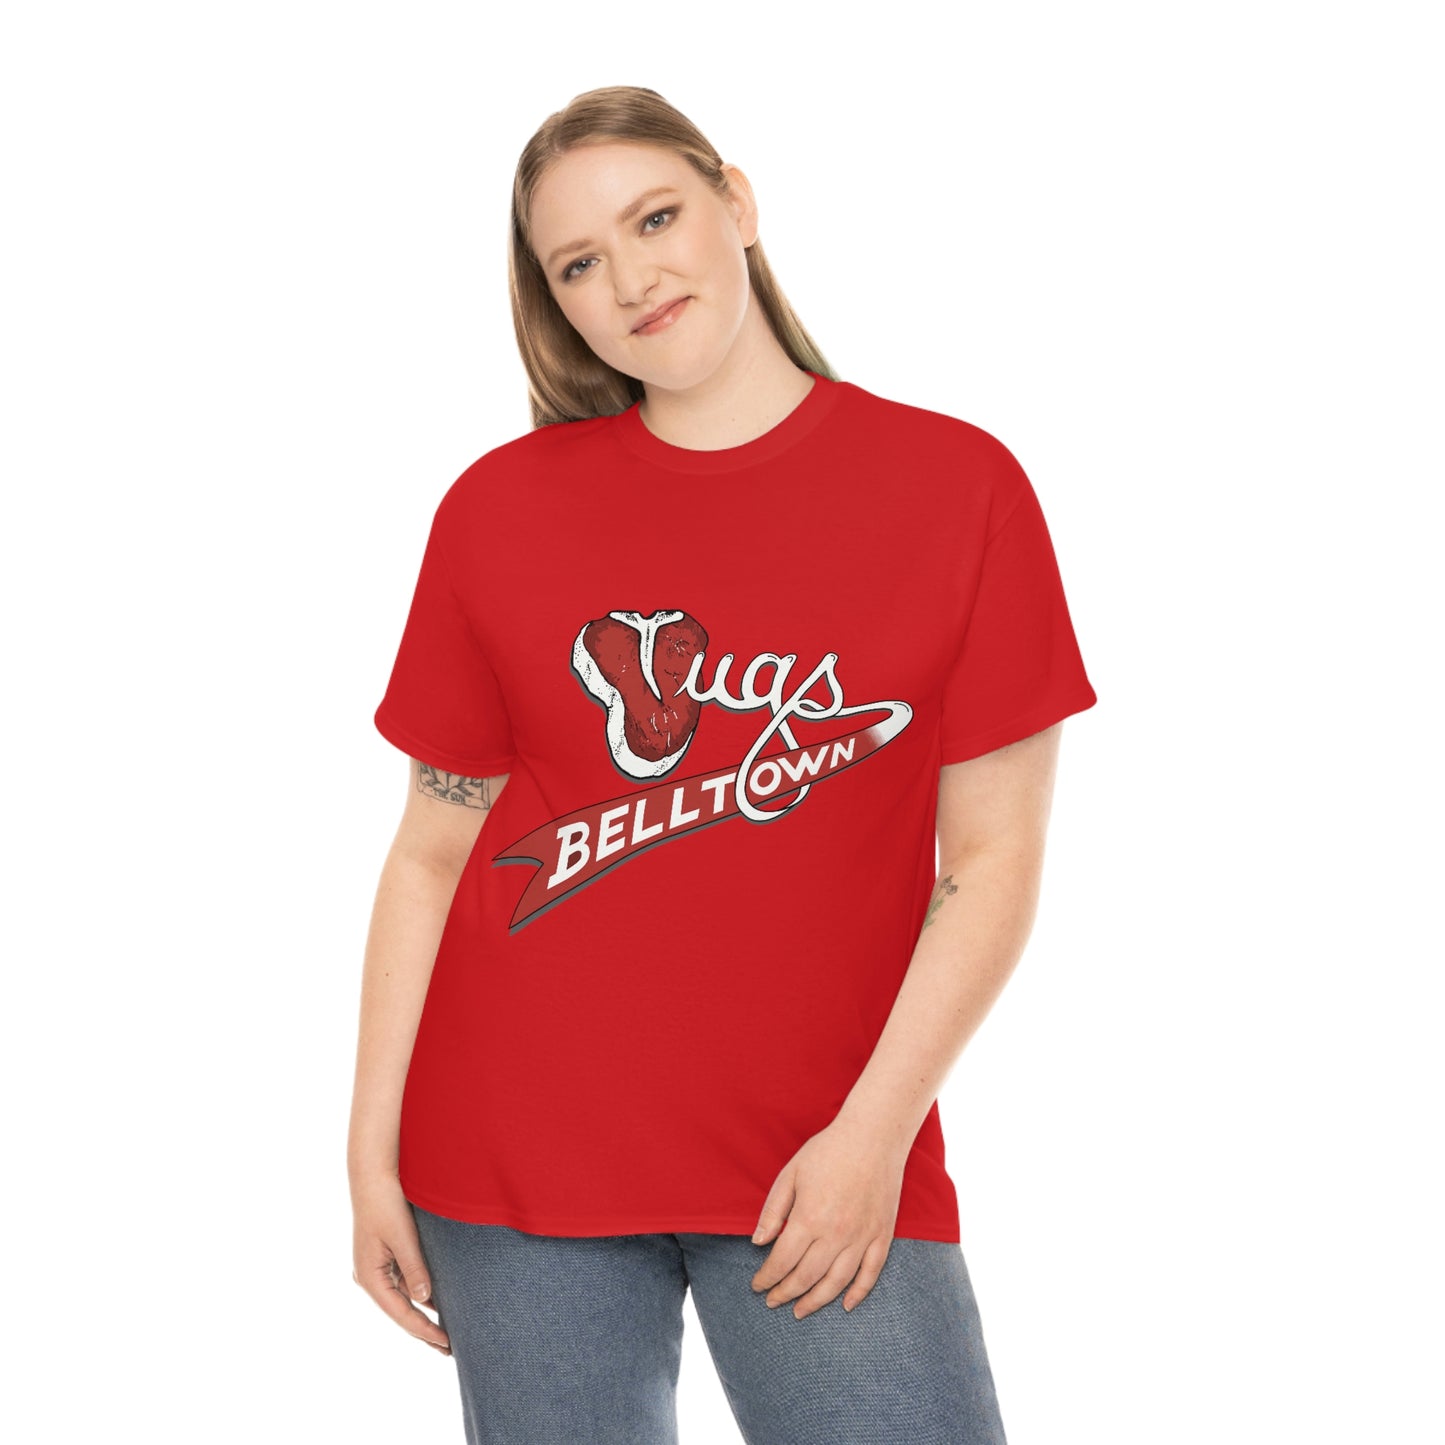 TUGS Unisex Cotton T-Shirt